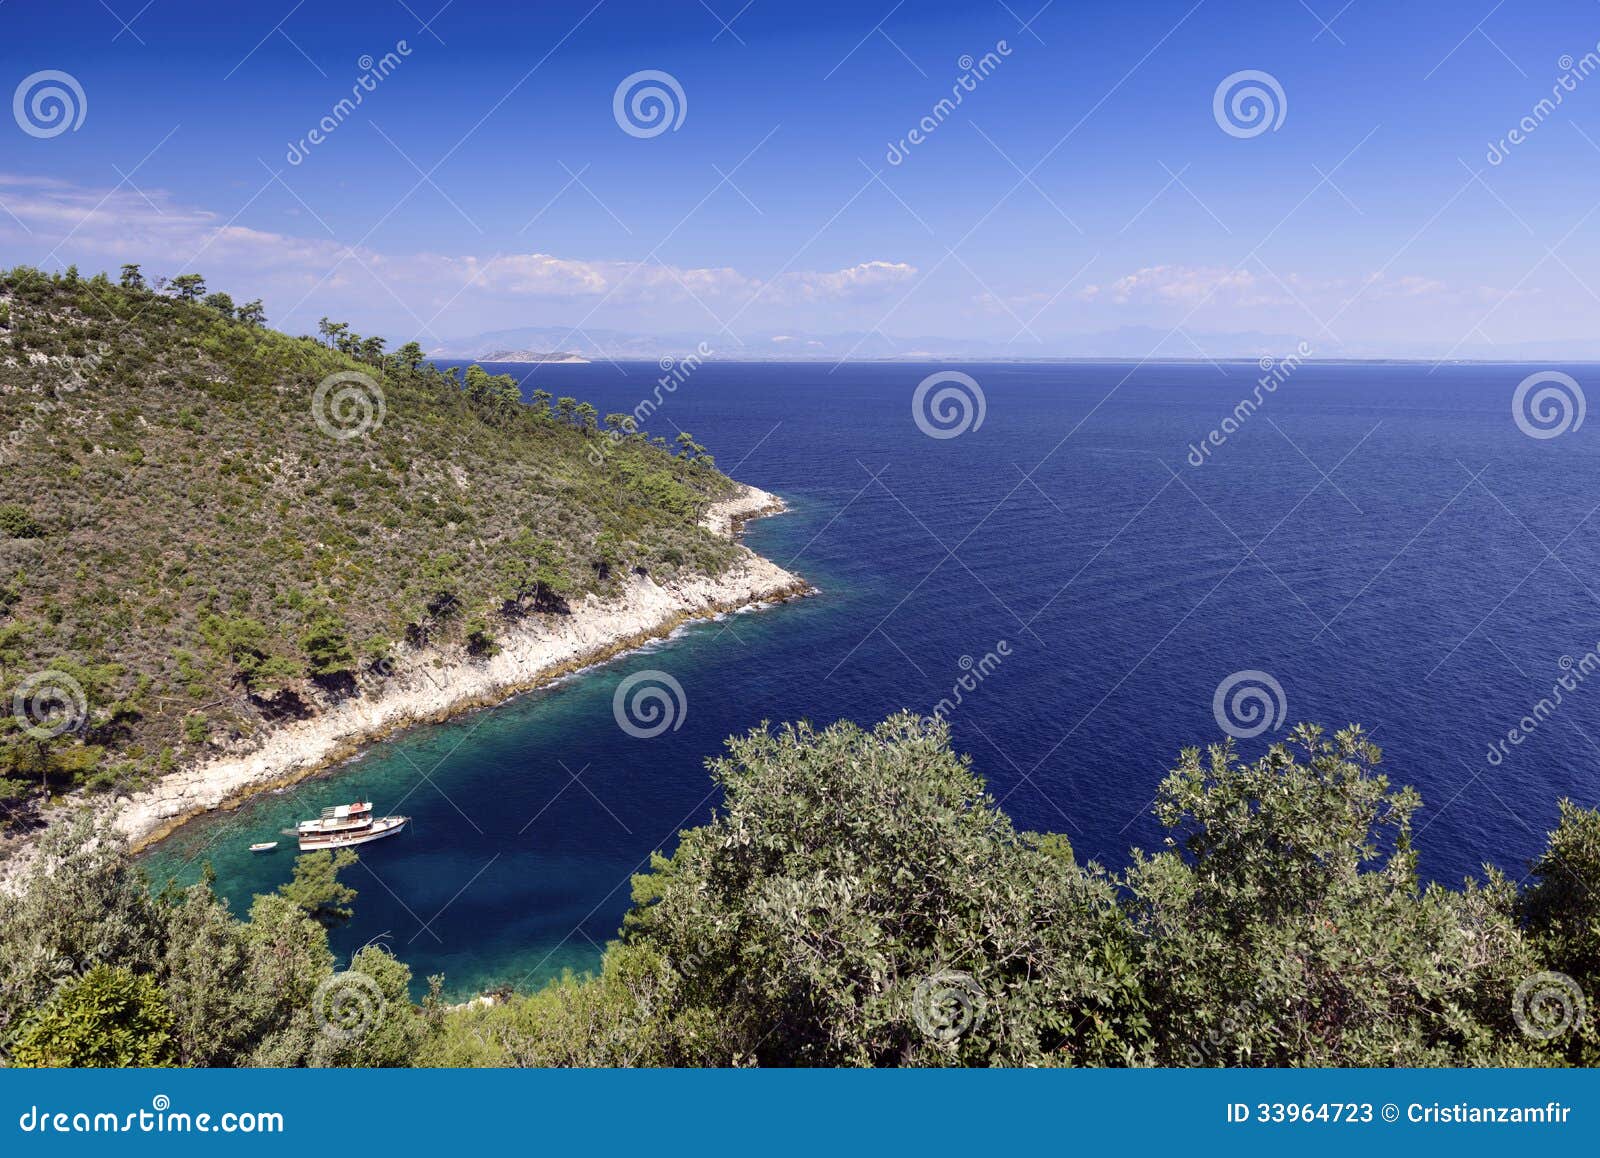 ship anchored in the bay tassos greece mr no pr yes 0 100 0